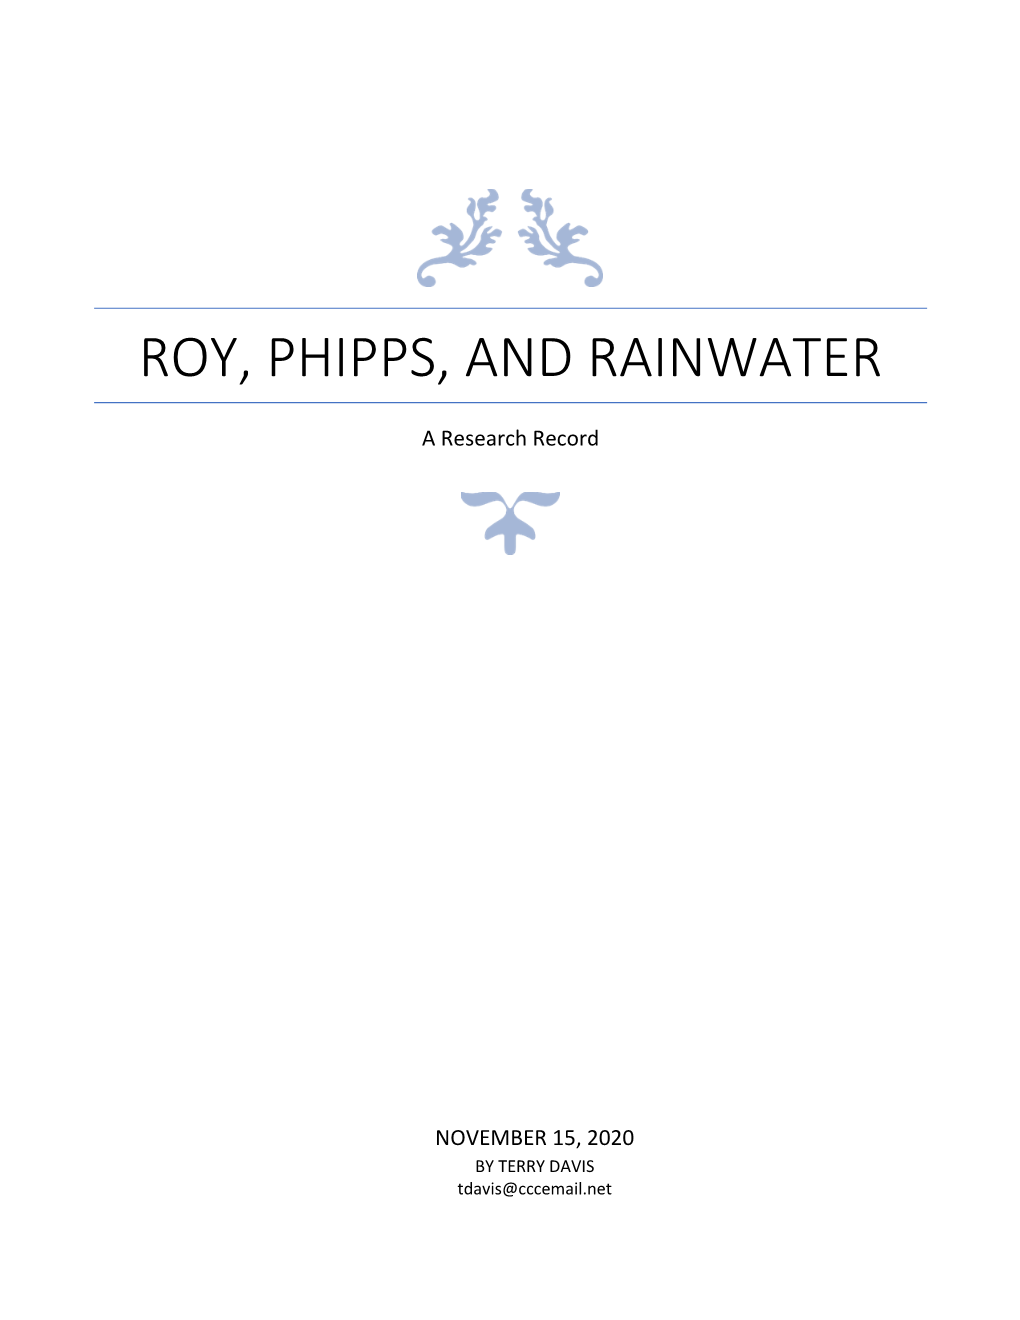 ROY, Phipps and RAINWATER